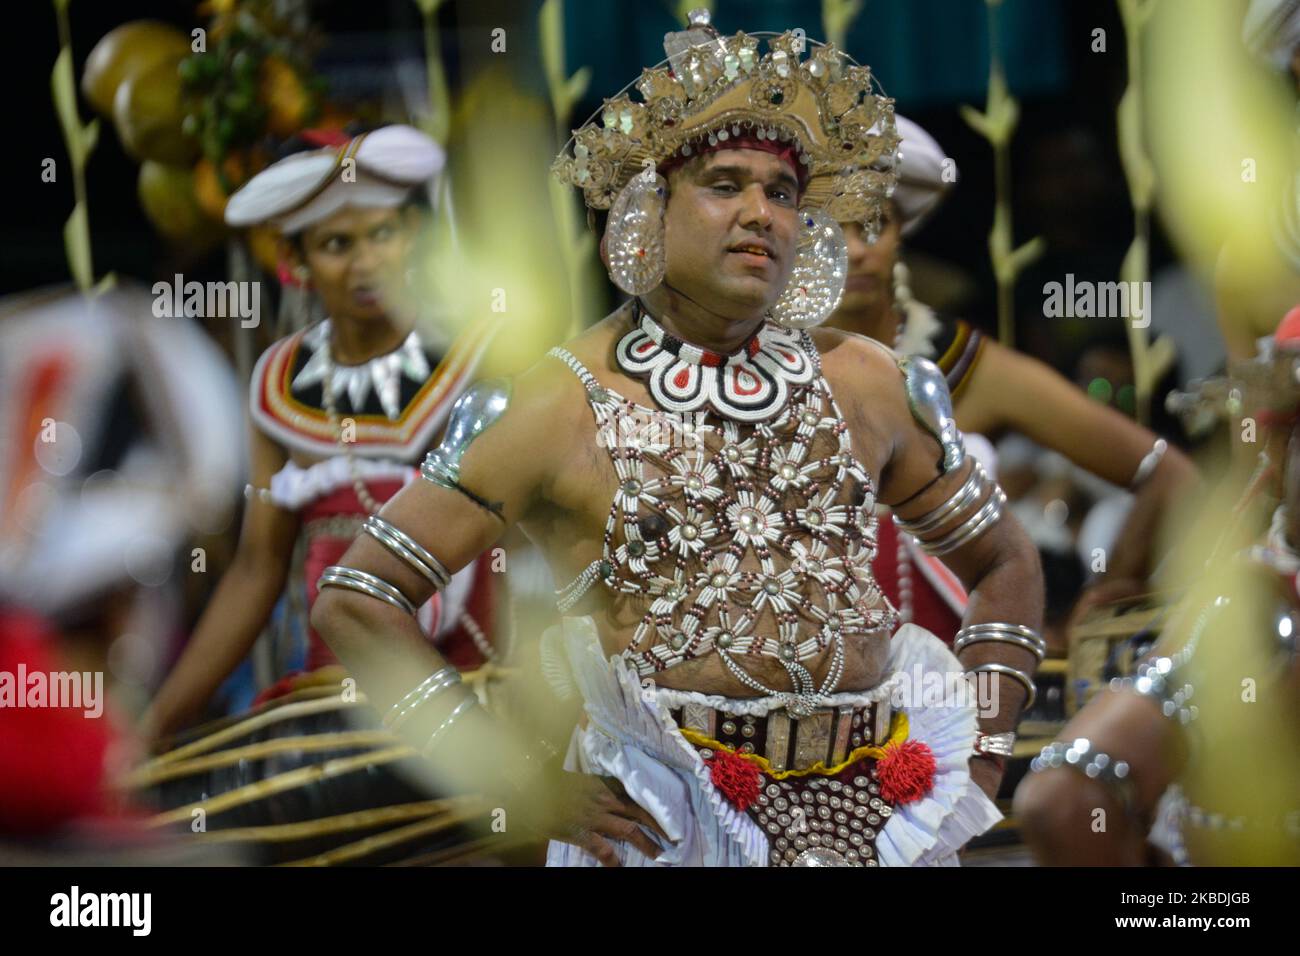 Traditionelle Tänzerin aus Sri Lanka führt traditionelle Zeremonie der Kohoba Kankaiya in Kotte Rajamaha Viharaya Colombo, Sri Lanka, am 28. Dezember 2019 durch (Foto von Akila Jayawardana/NurPhoto) Stockfoto